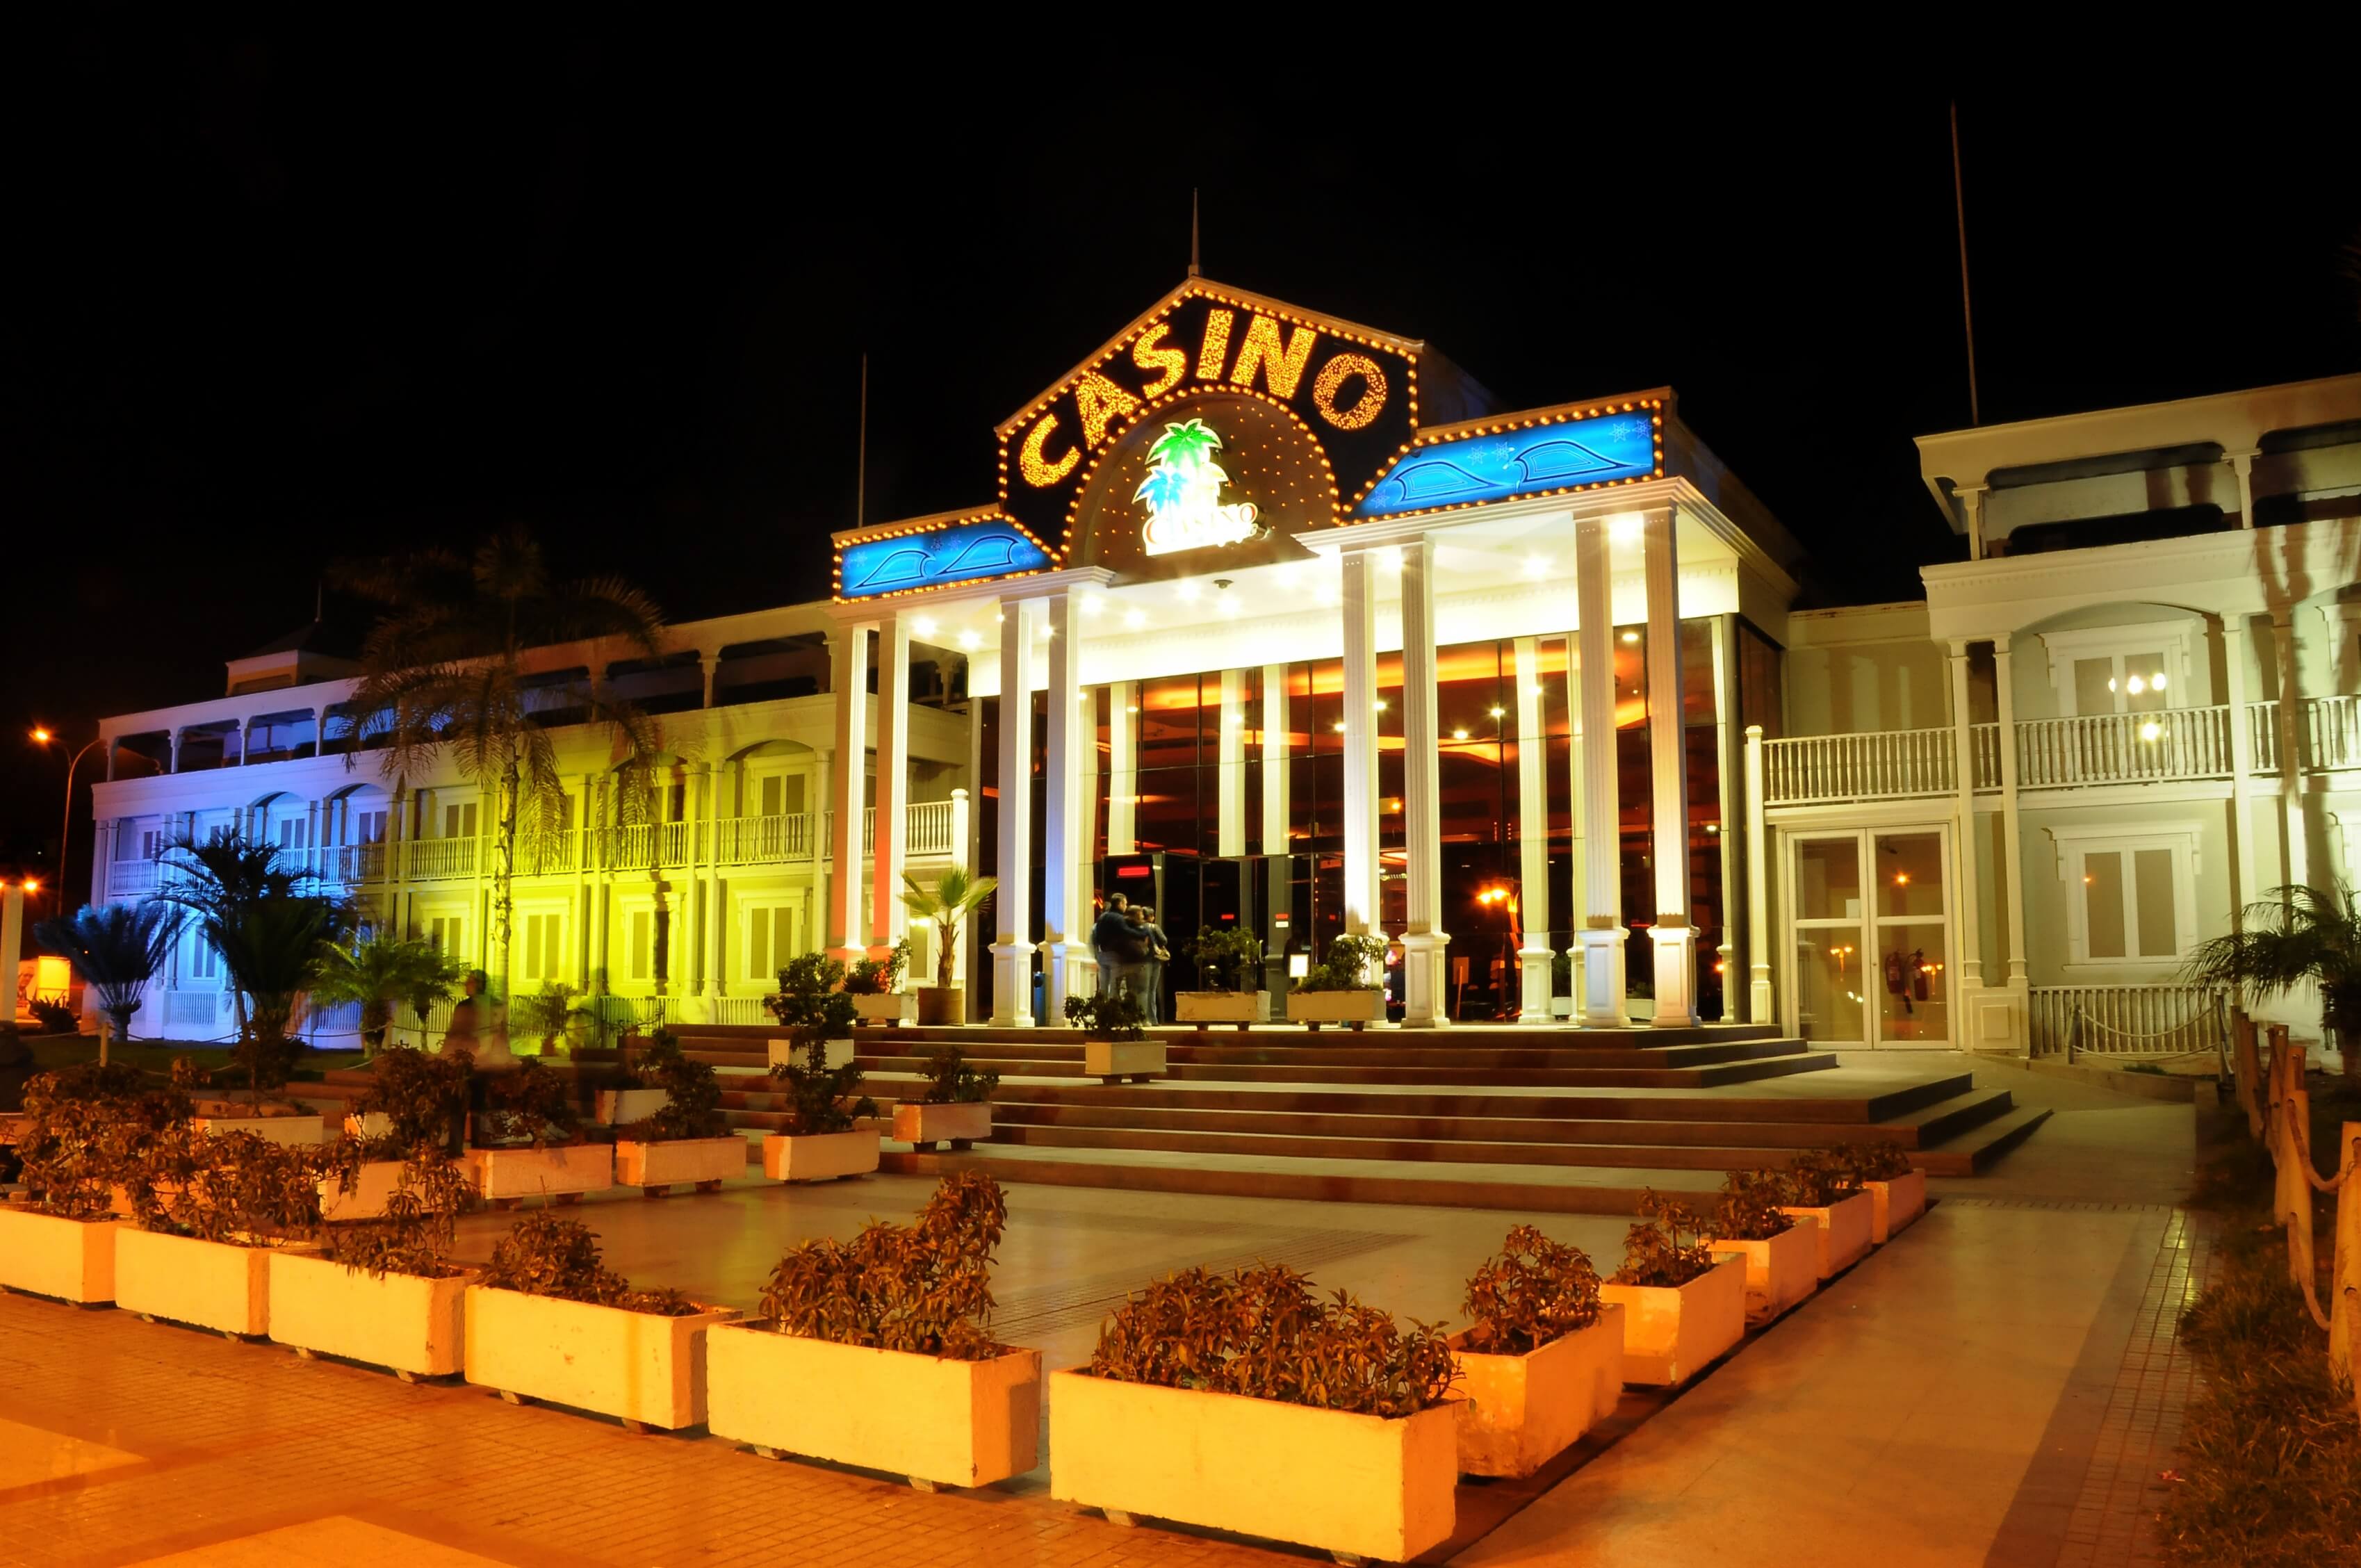 casinos on line chile crea expertos